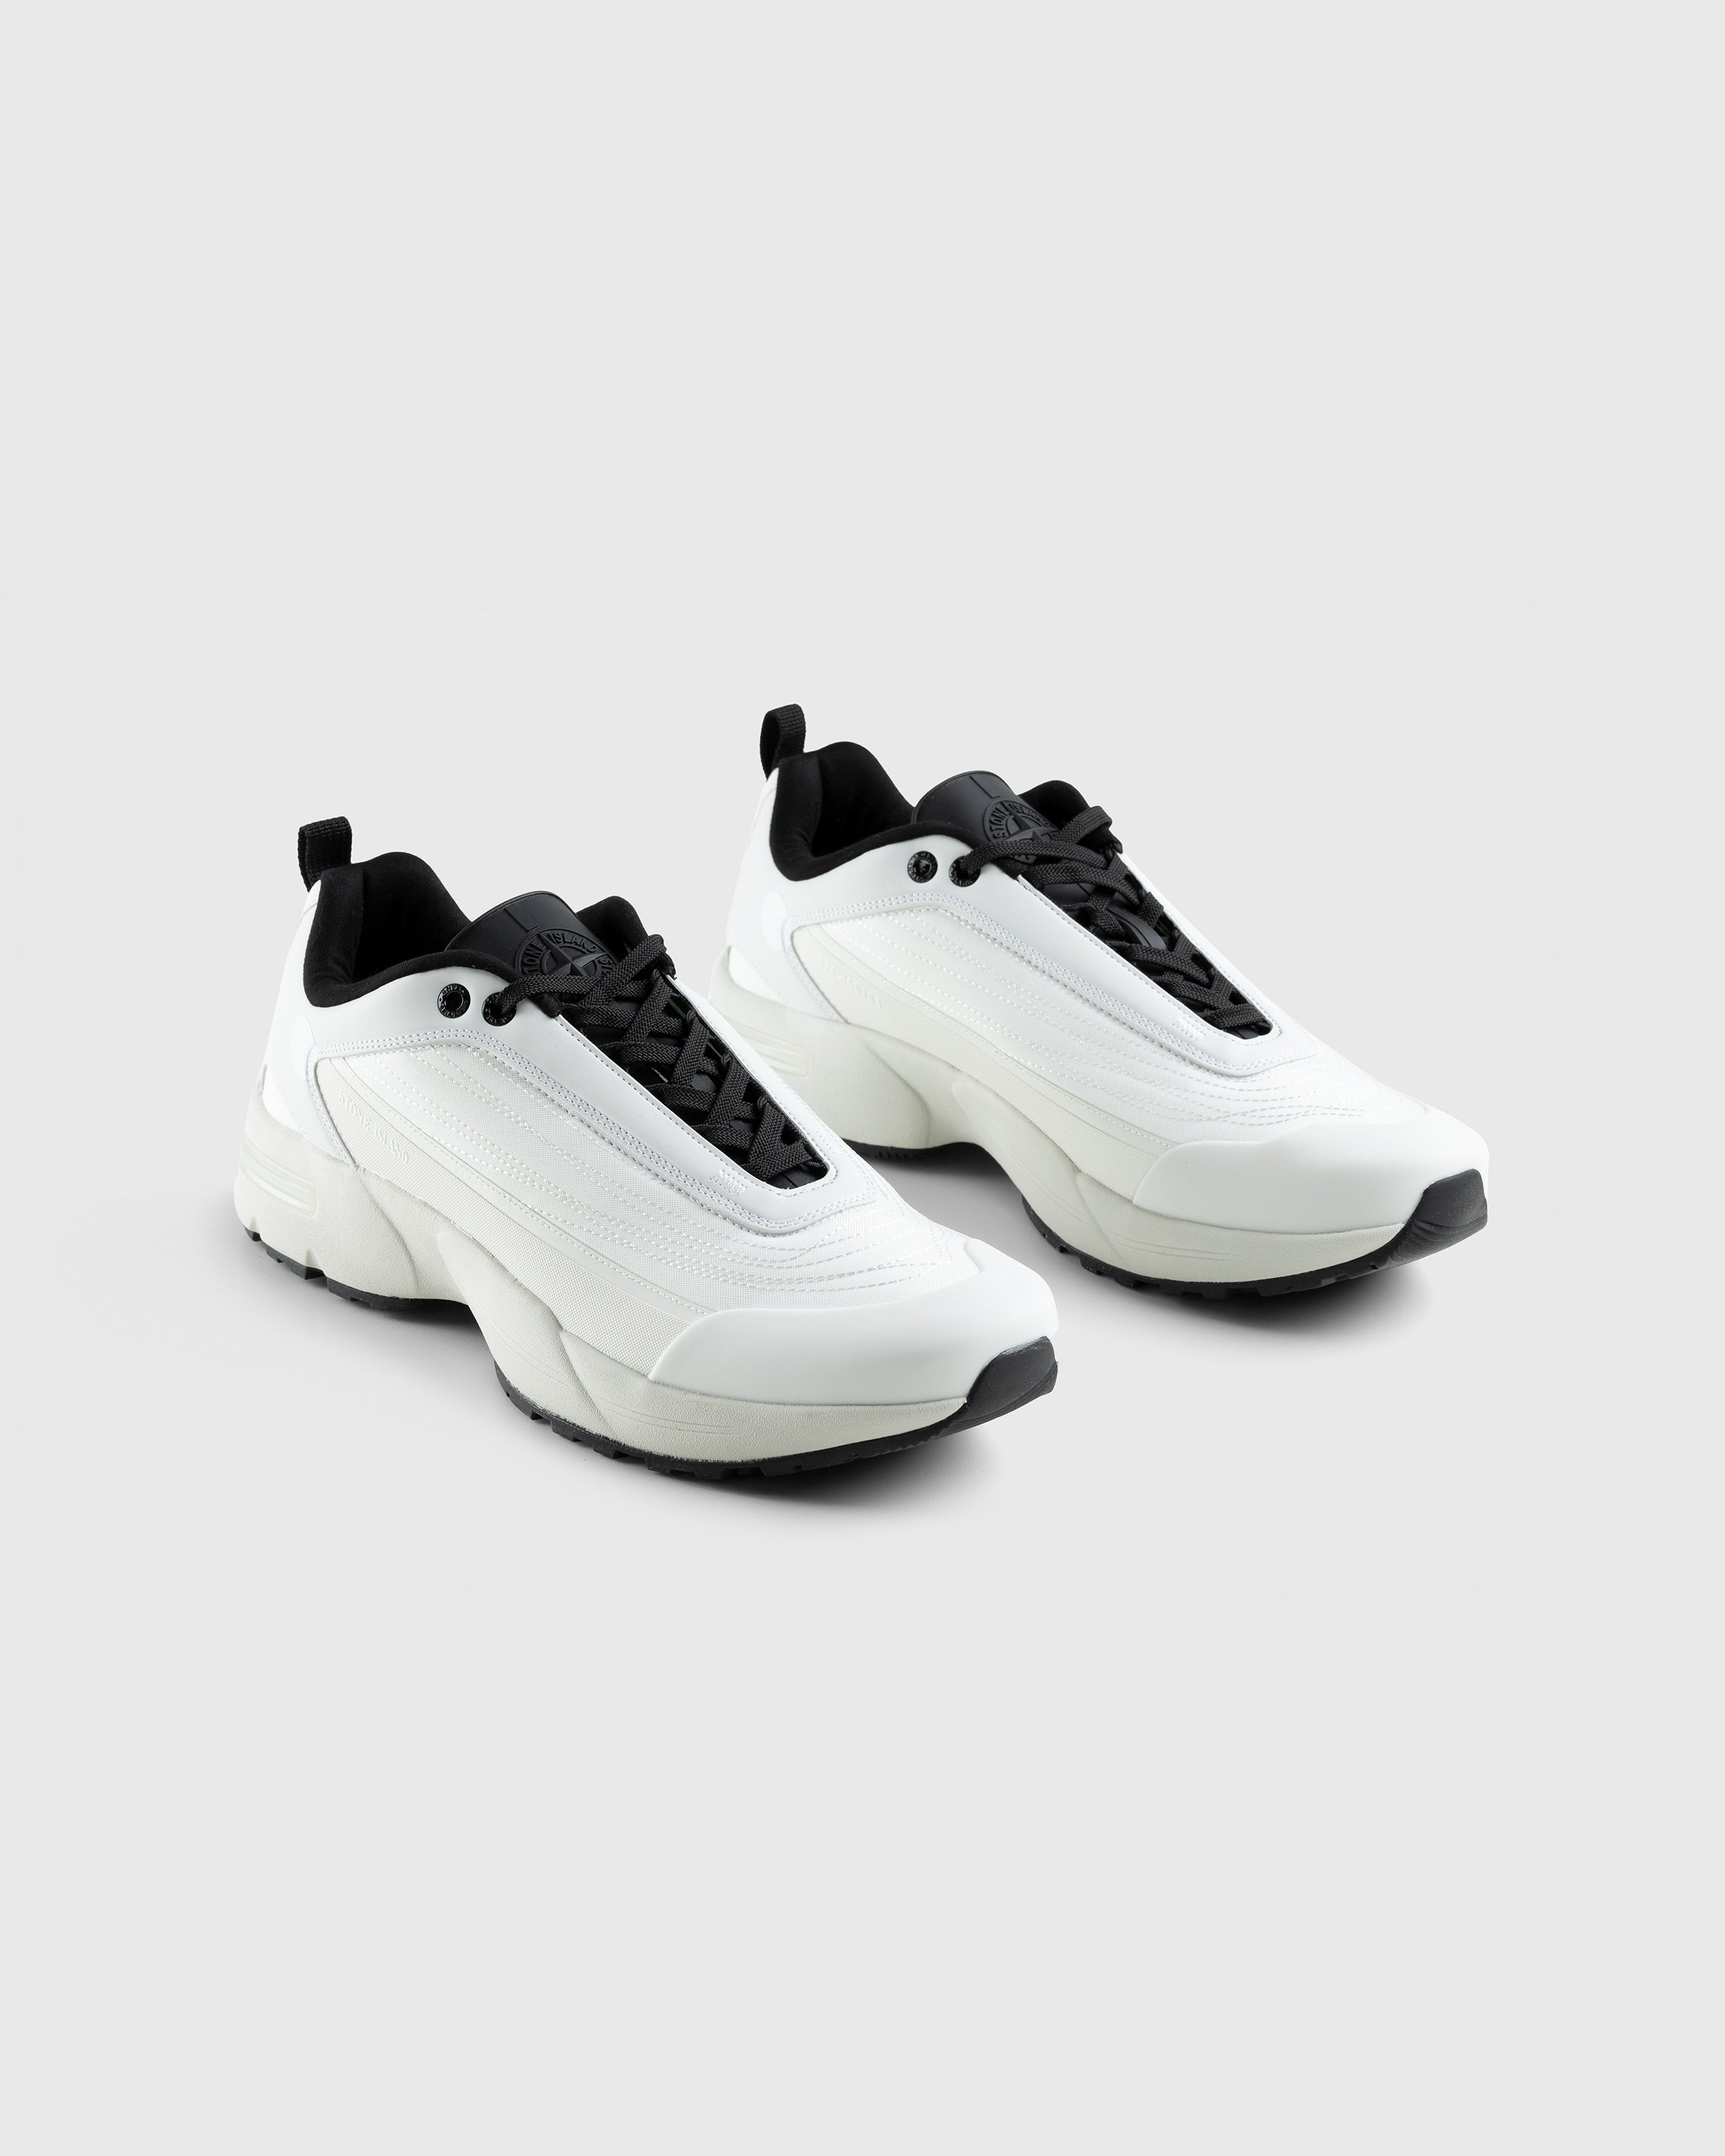 Stone Island - Grime Sneaker White - Footwear - White - Image 3